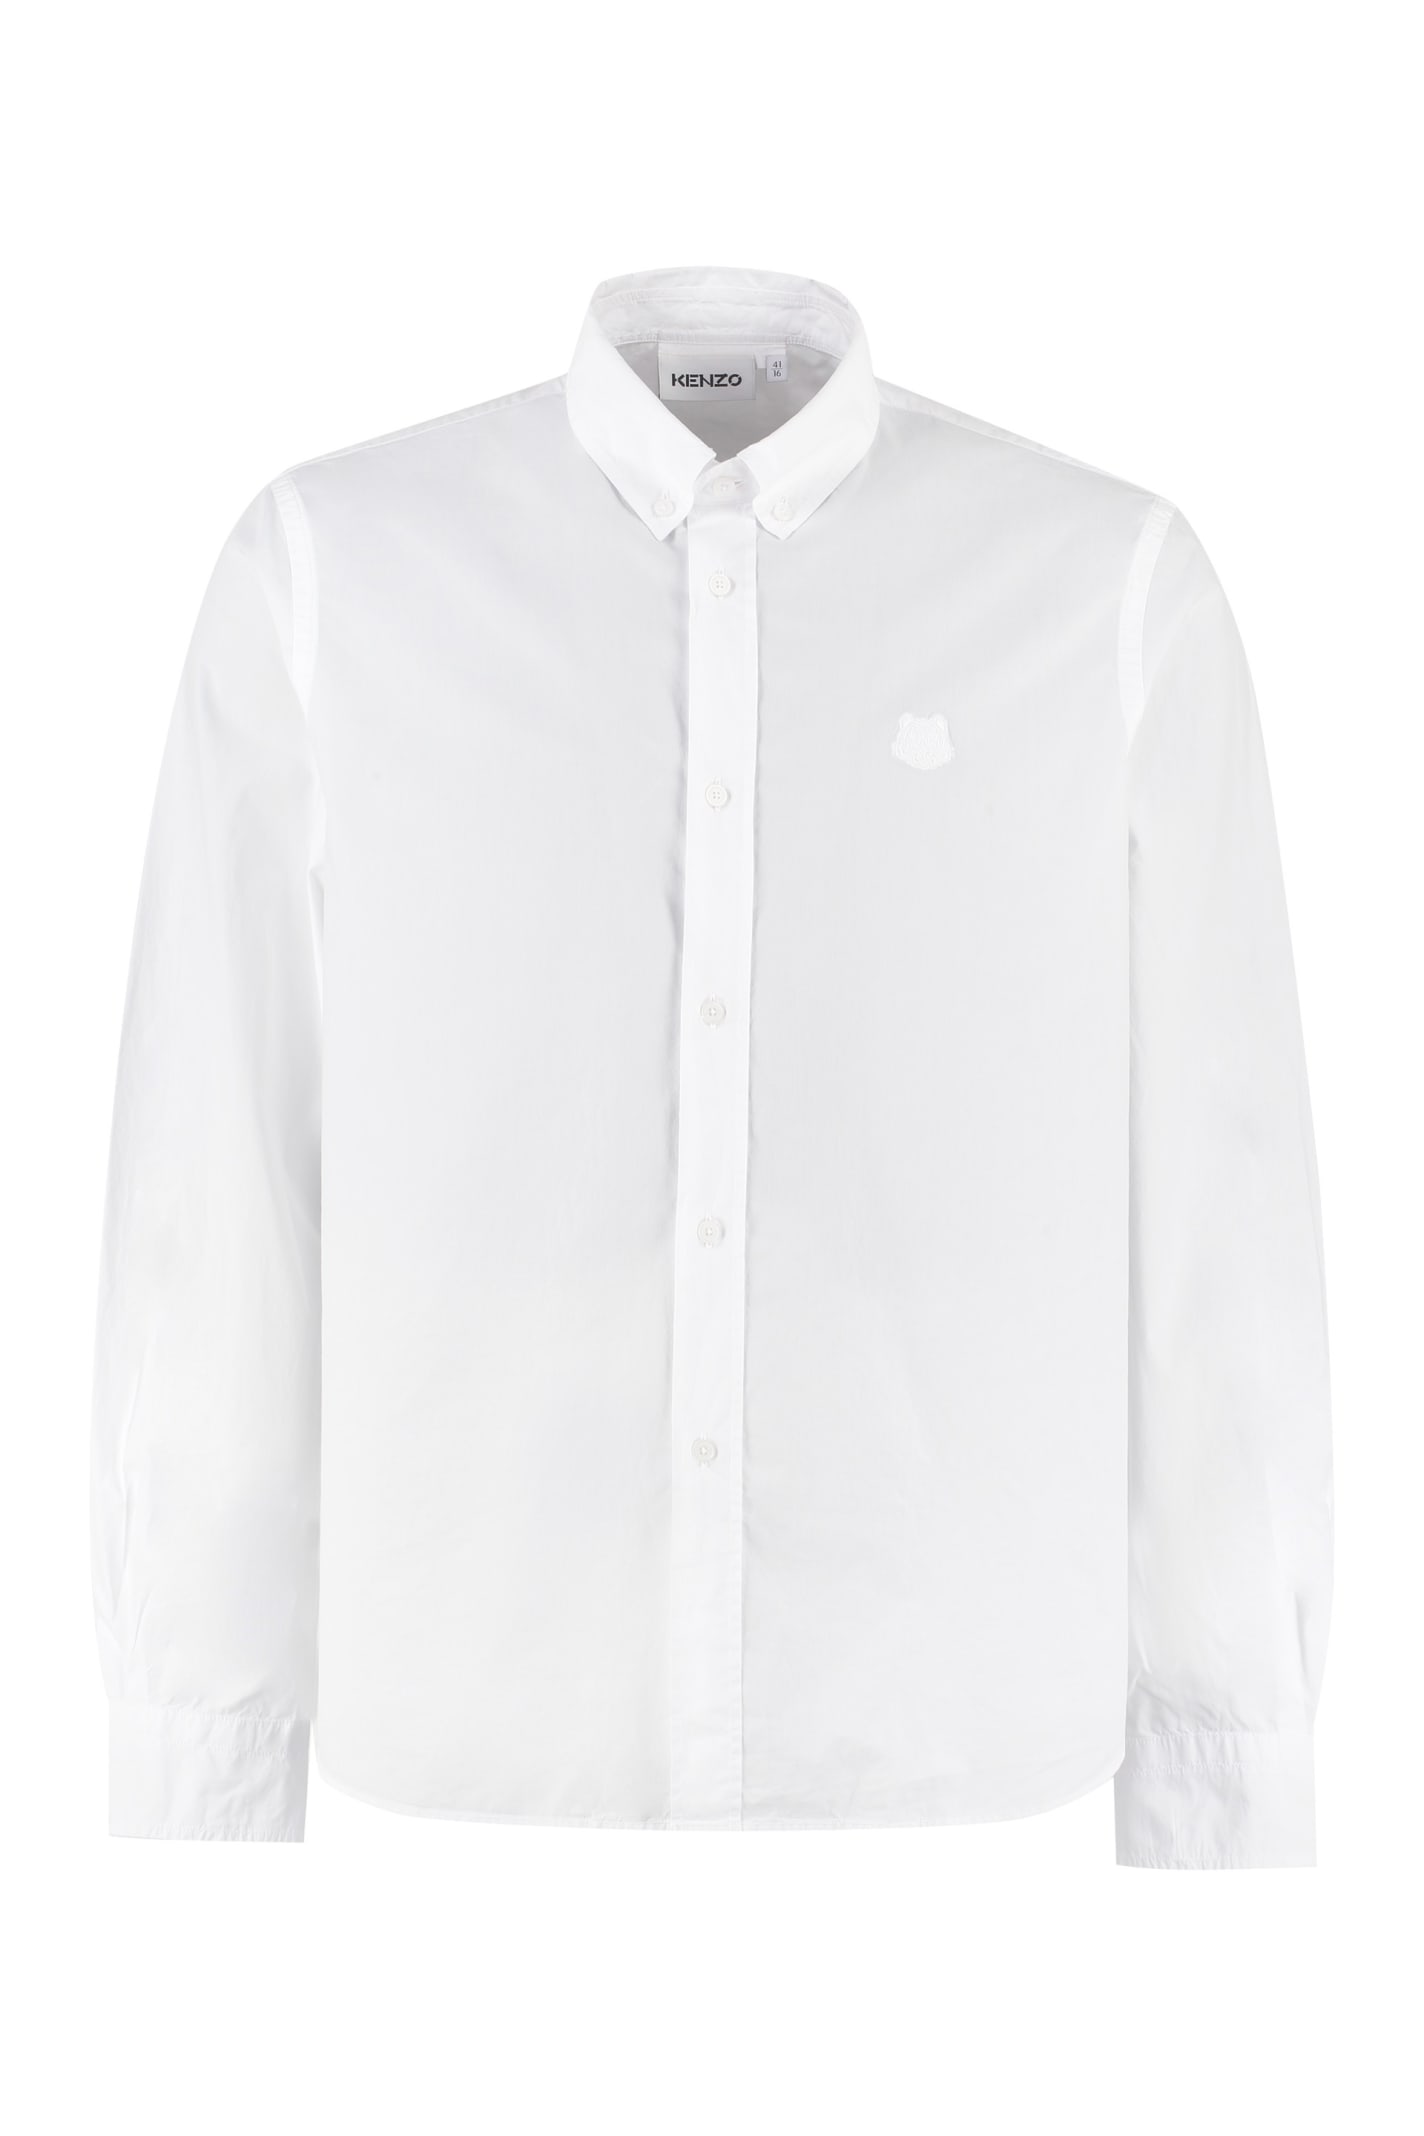 Kenzo Cotton Button-down Shirt